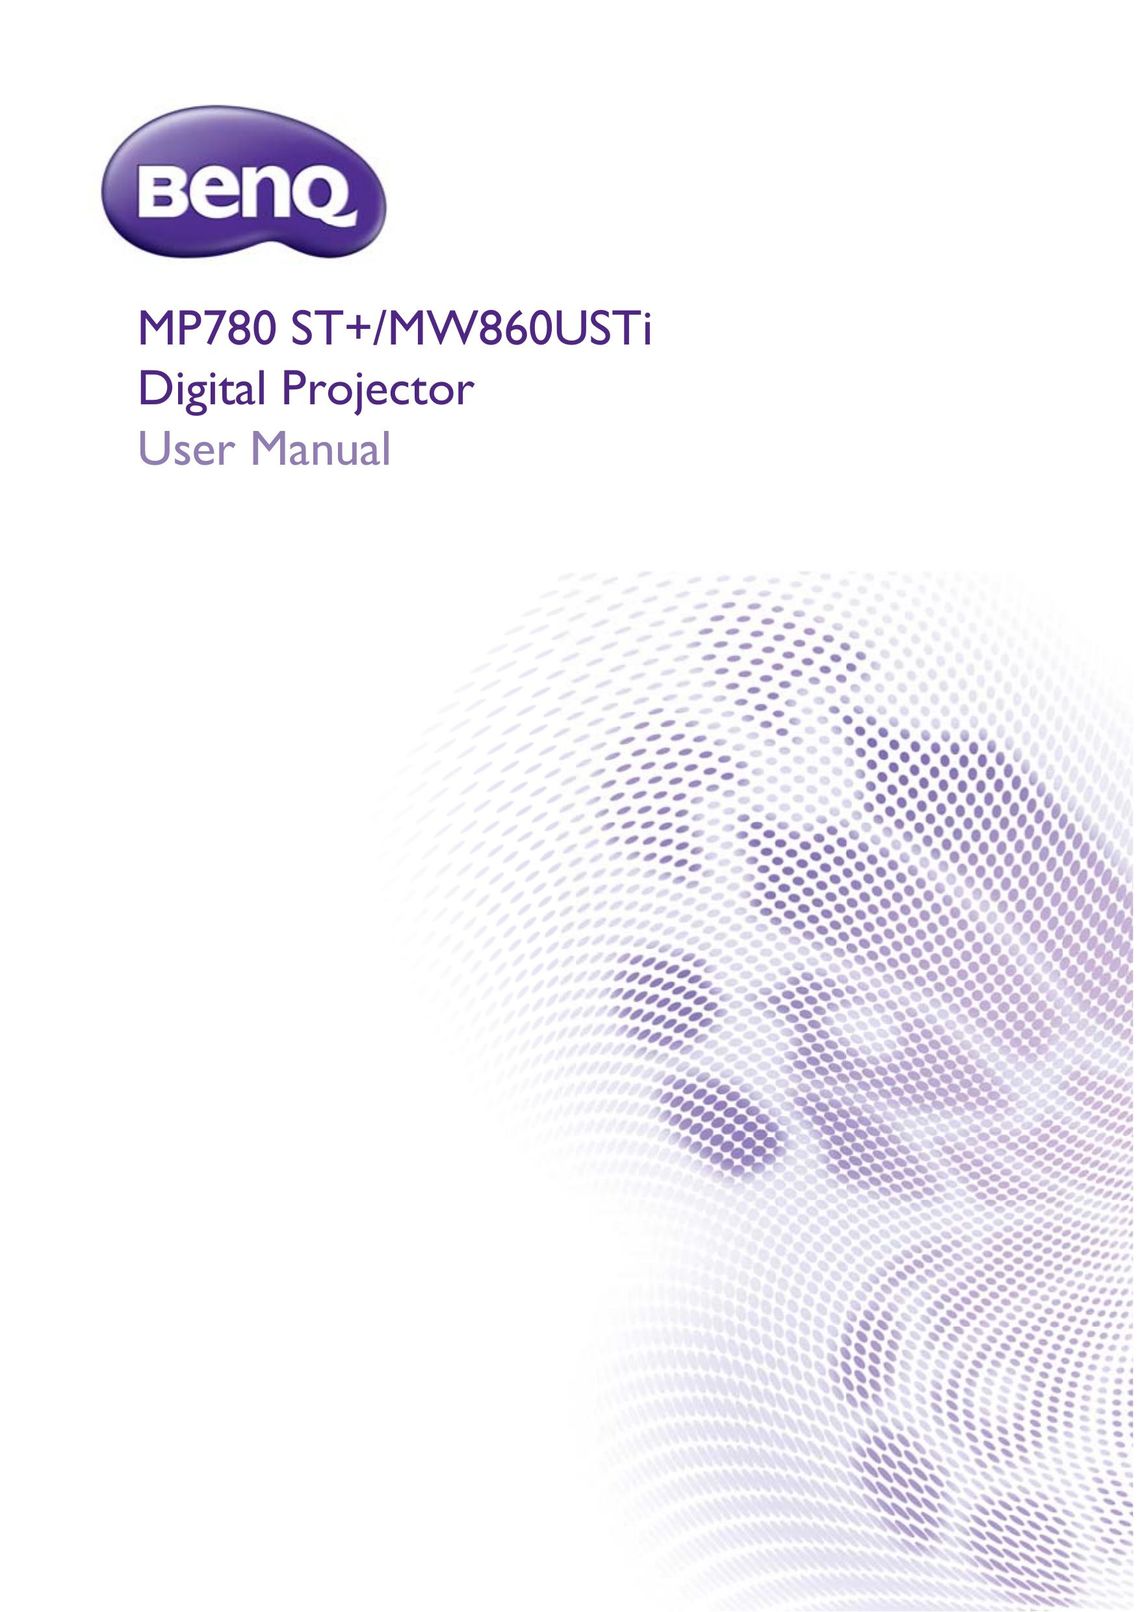 BenQ MP780 ST+ Projector User Manual